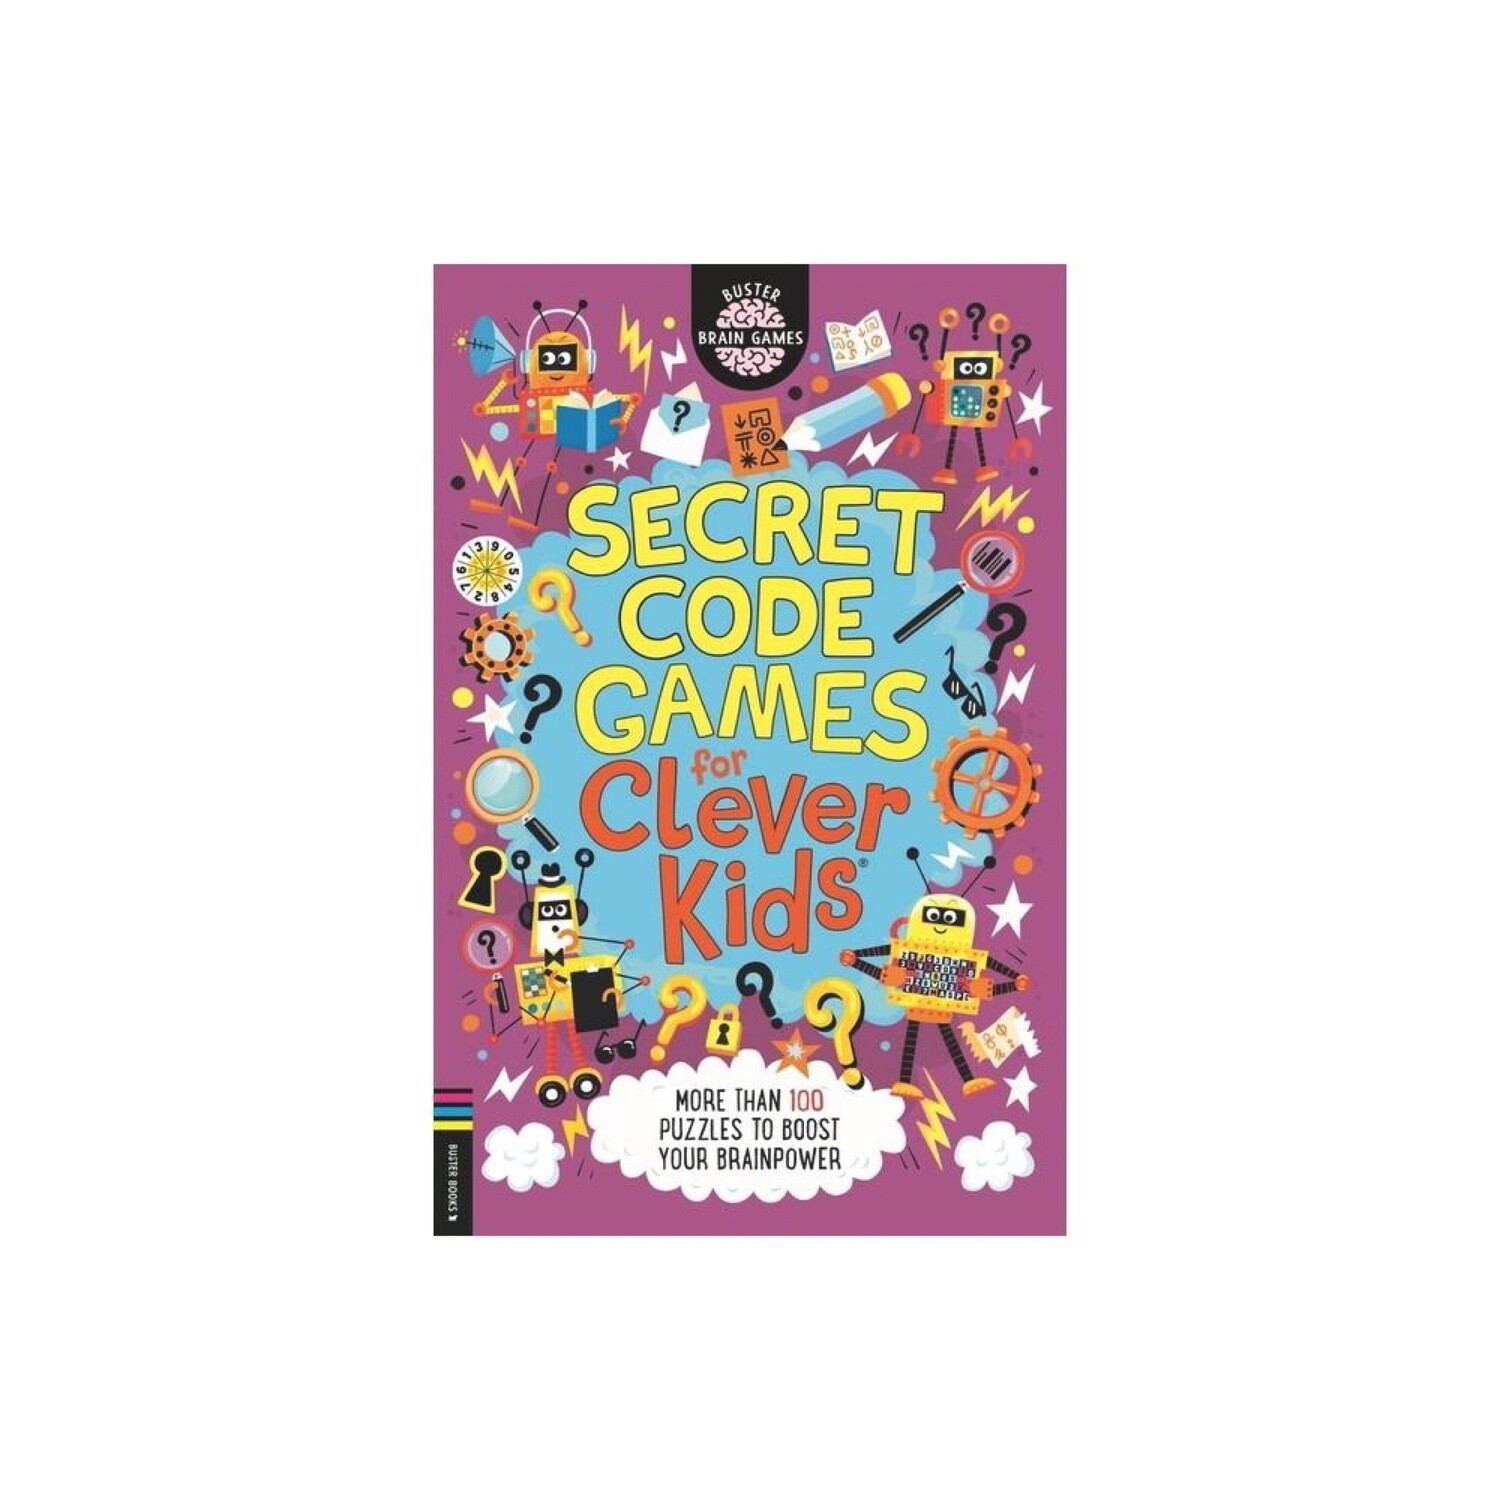 Secret Code Games for Clever Kids(R)